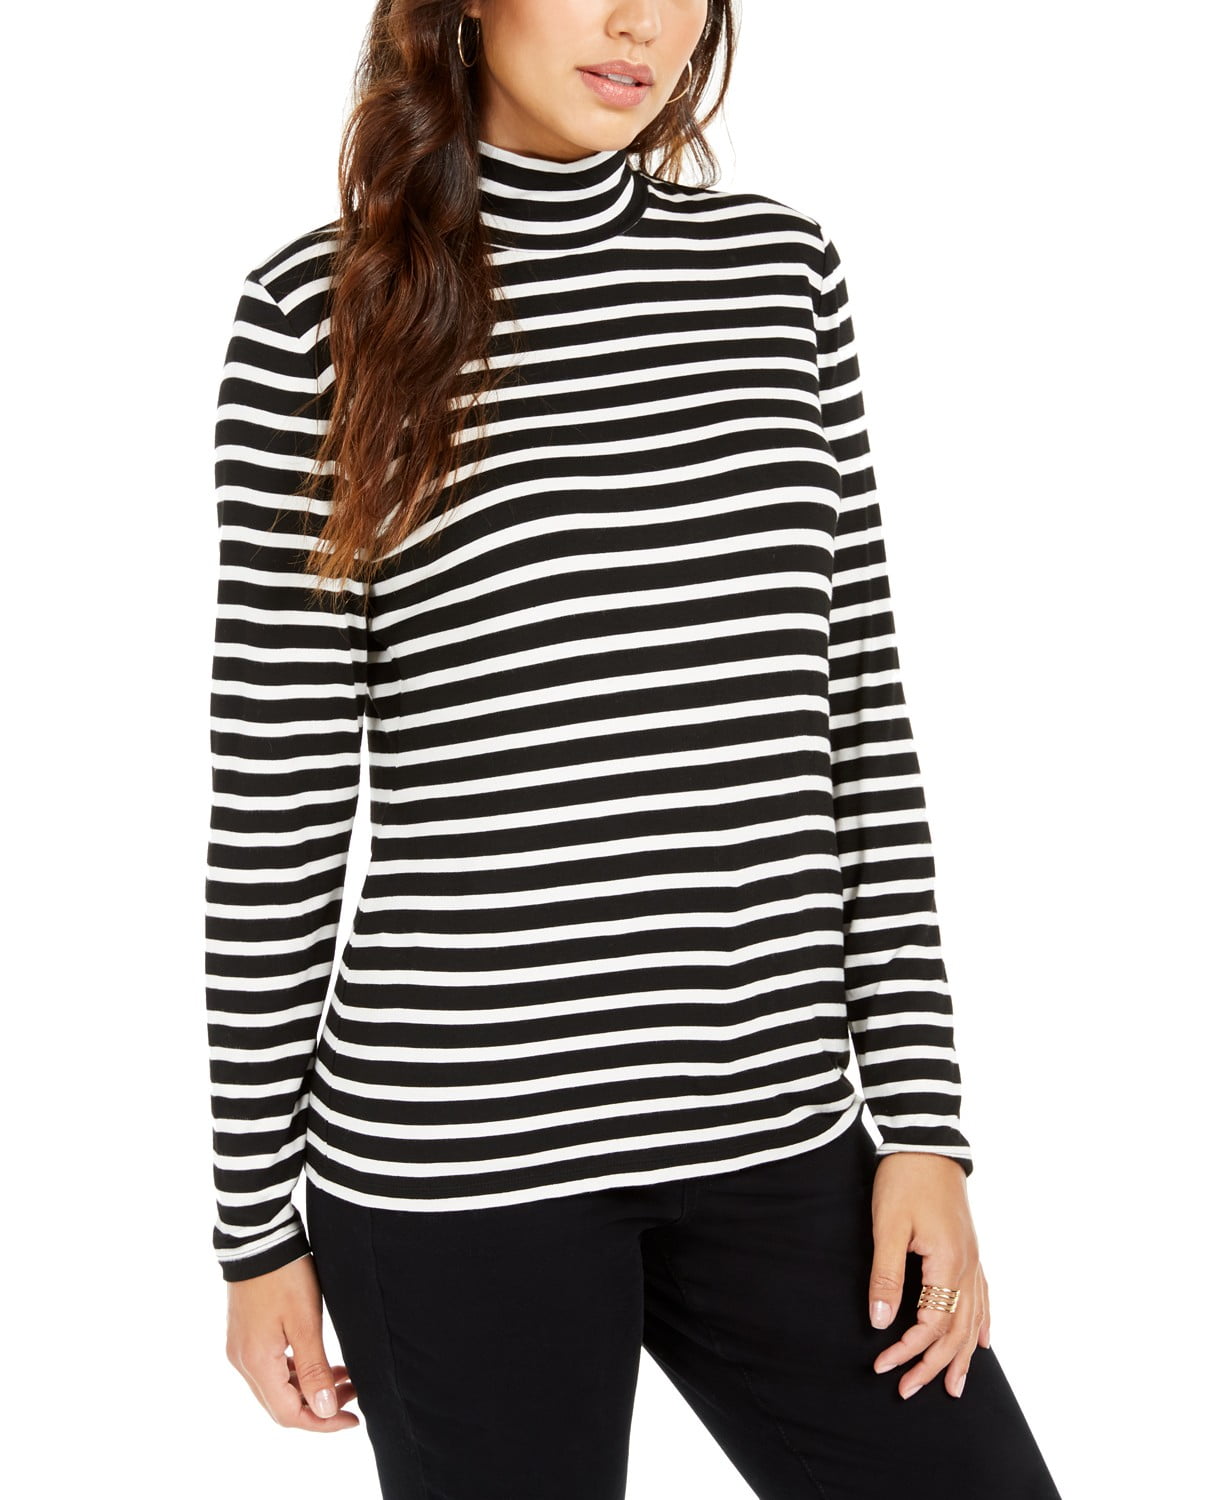 Style & Co Women's Striped Turtleneck Top Black Size Large - Walmart.com